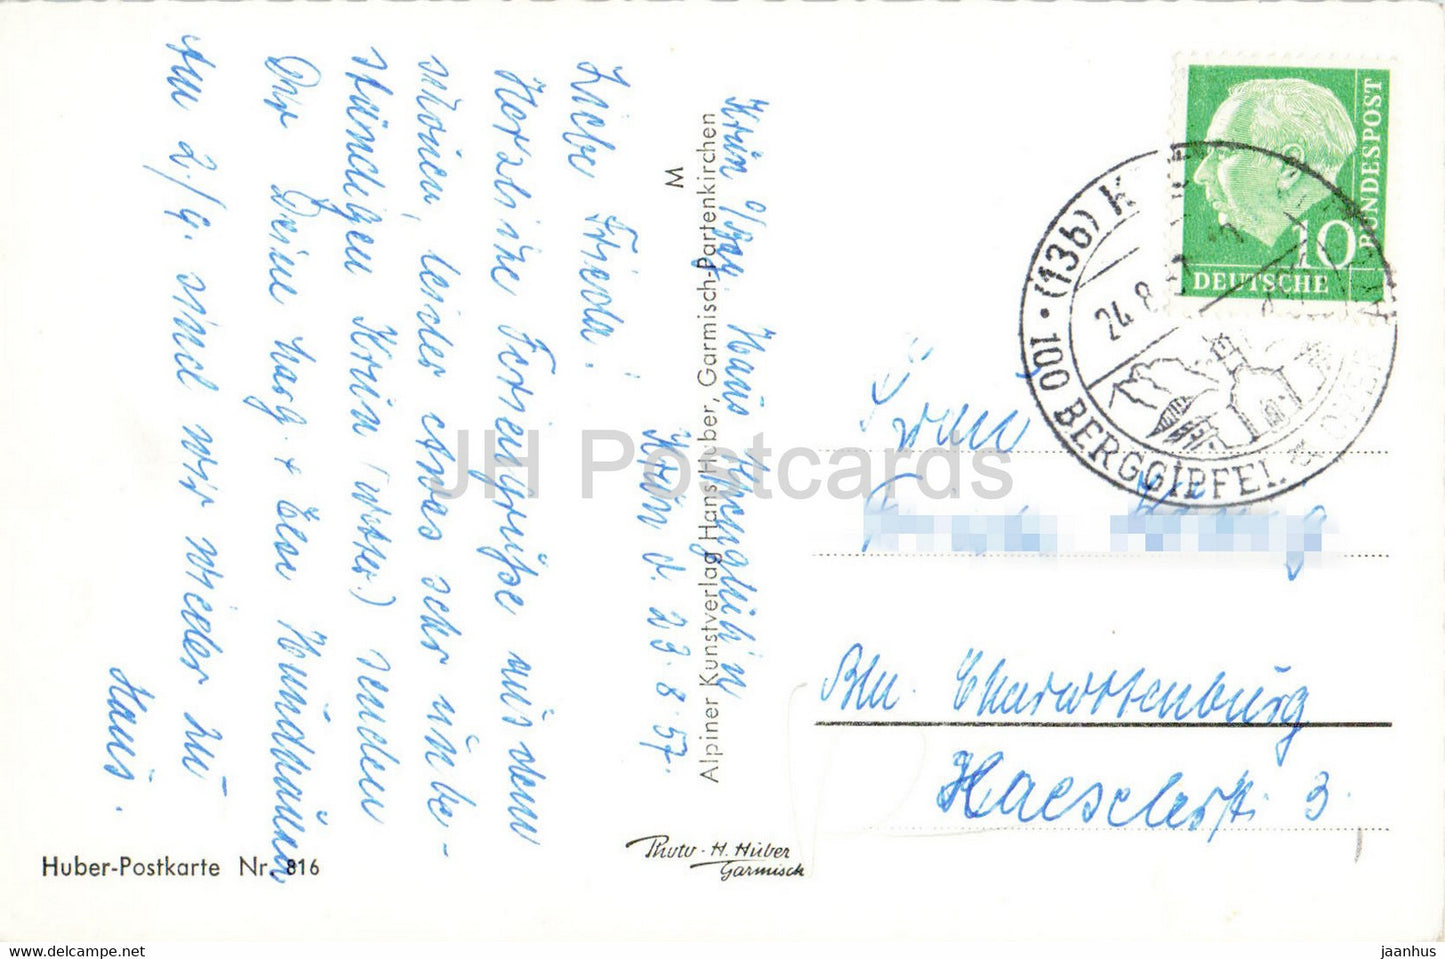 Krun gegen Zugspitzgruppe 2964 m - old postcard - 1957 - Germany - used